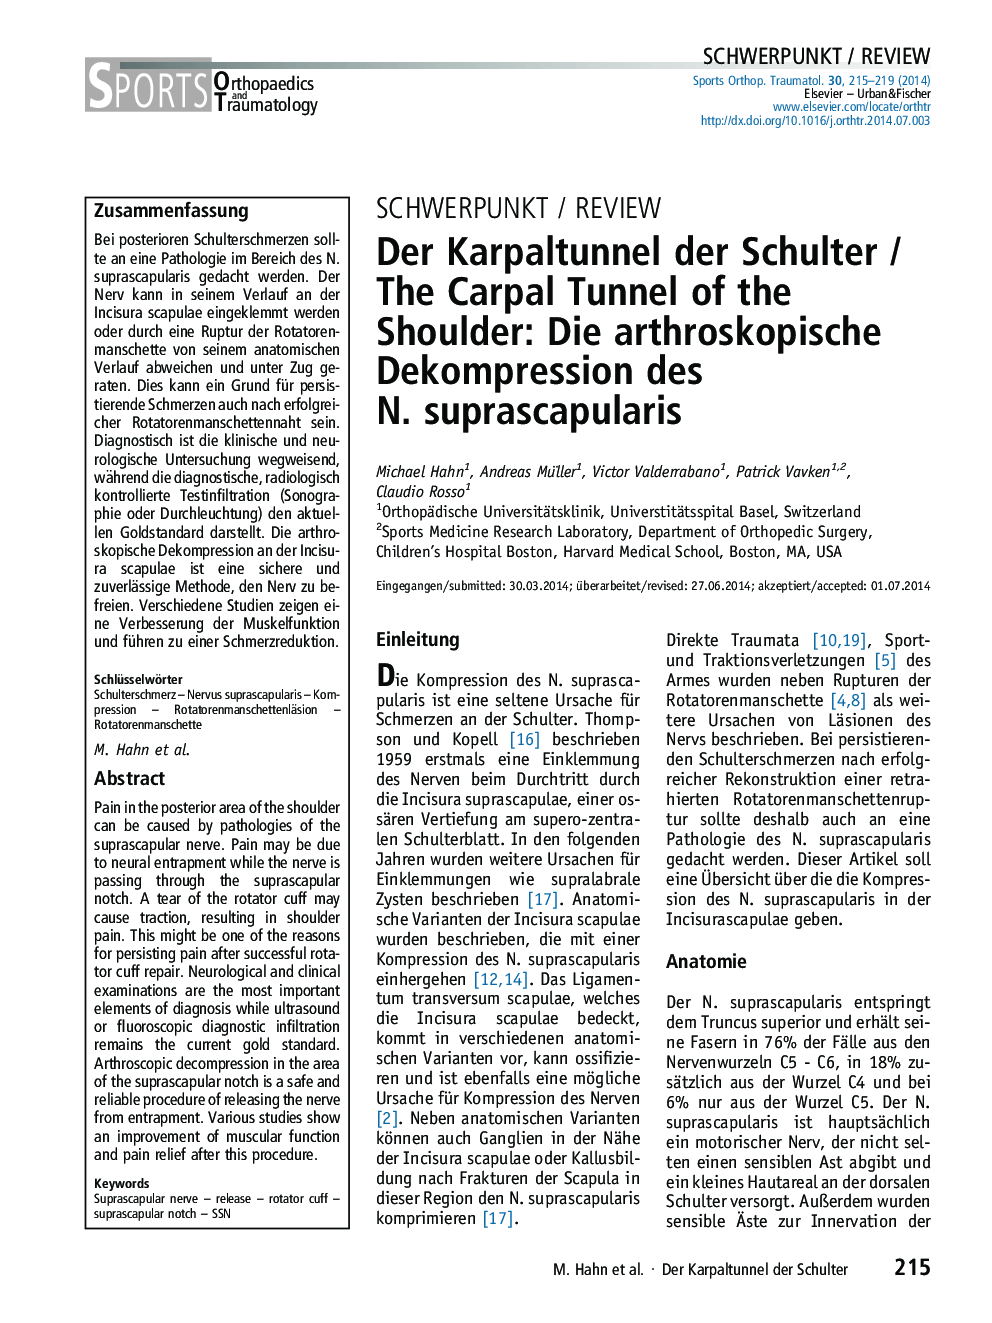 Der Karpaltunnel der Schulter / The Carpal Tunnel of the Shoulder: Die arthroskopische Dekompression des N. suprascapularis